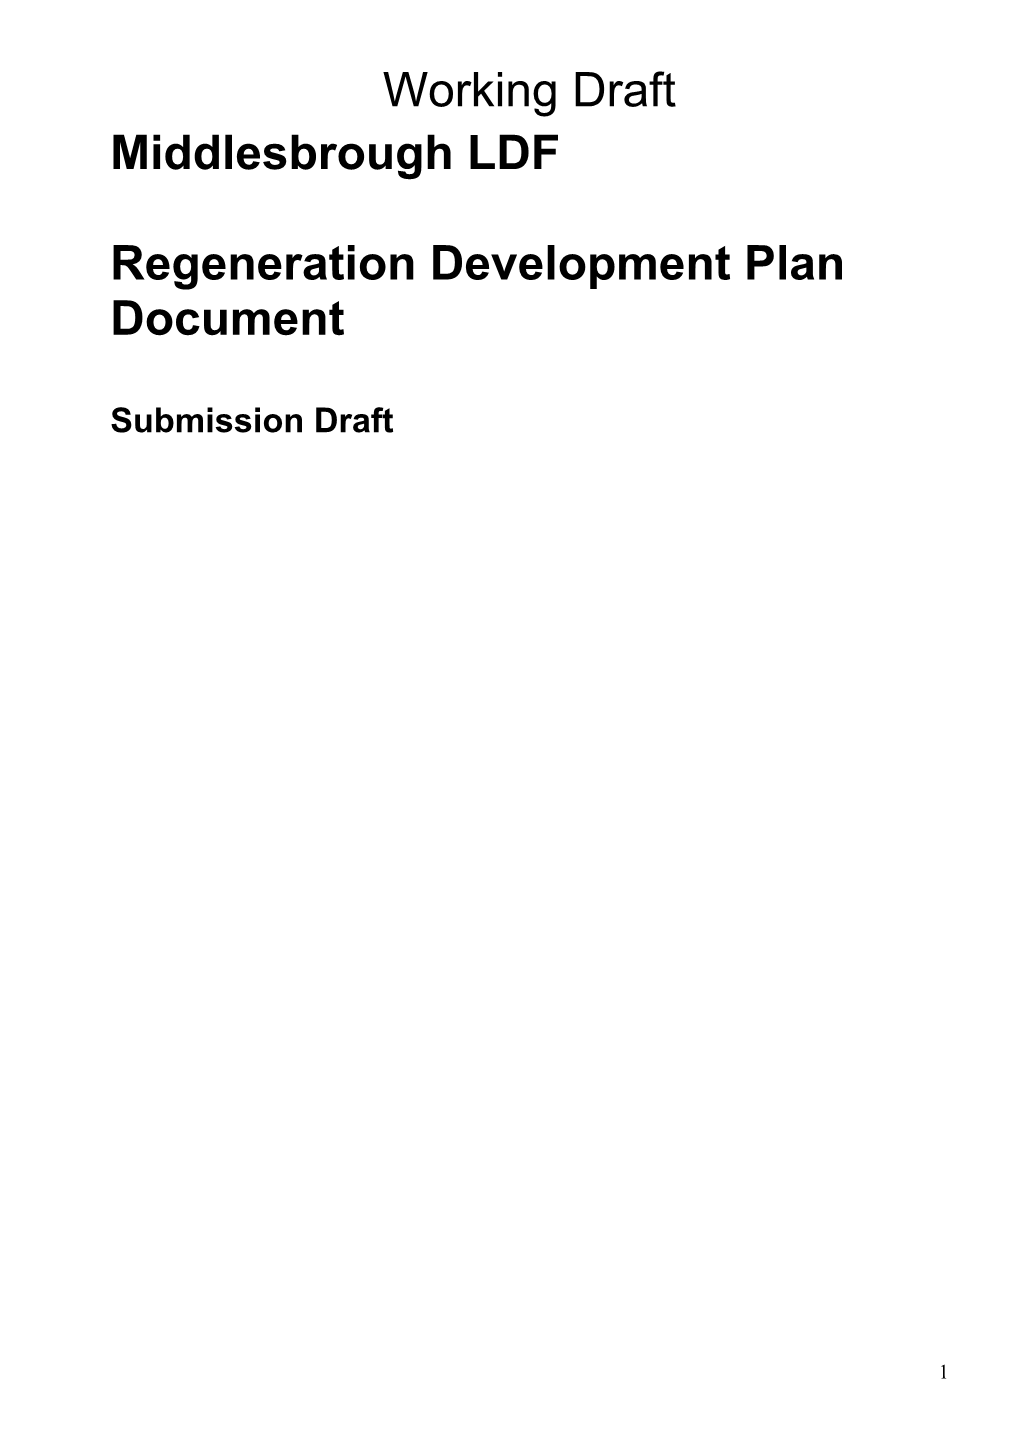 Regeneration Development Plan Document